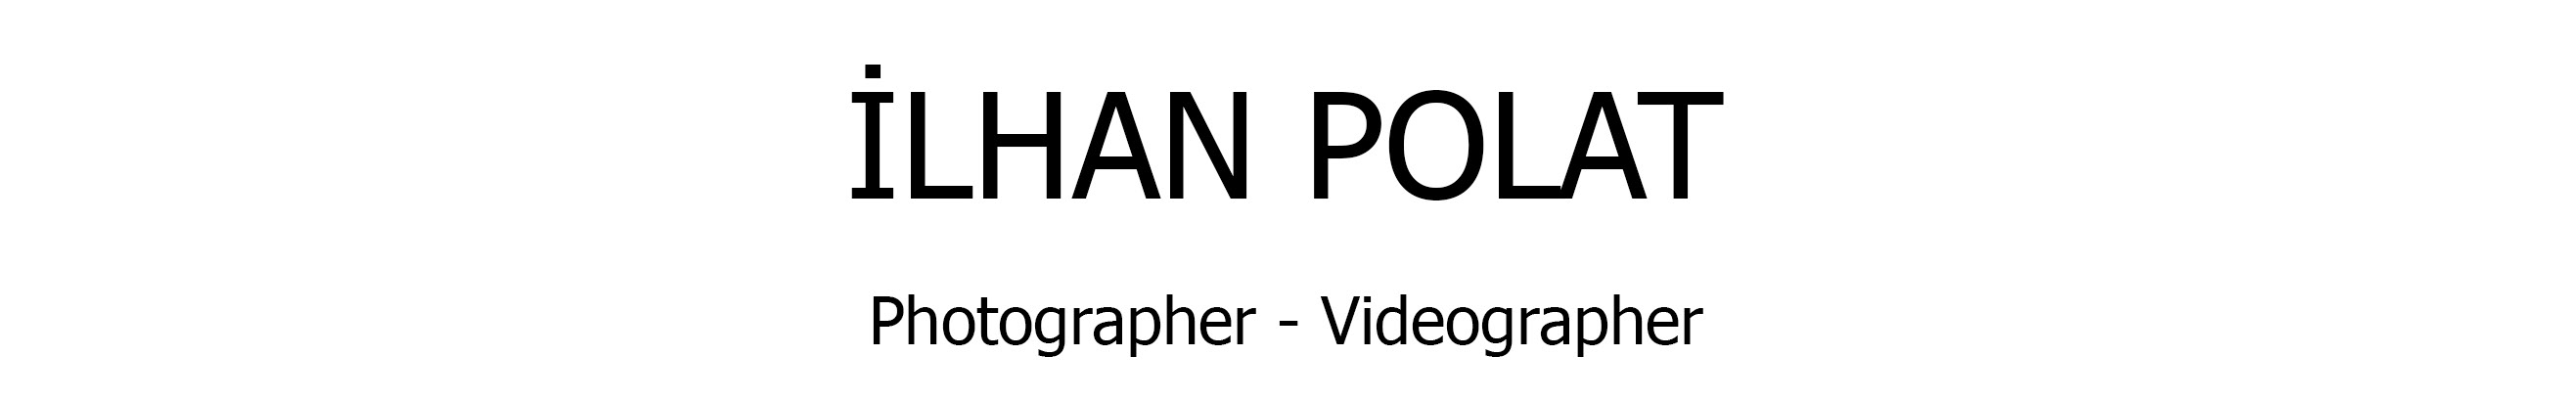 ilhan Polat's profile banner